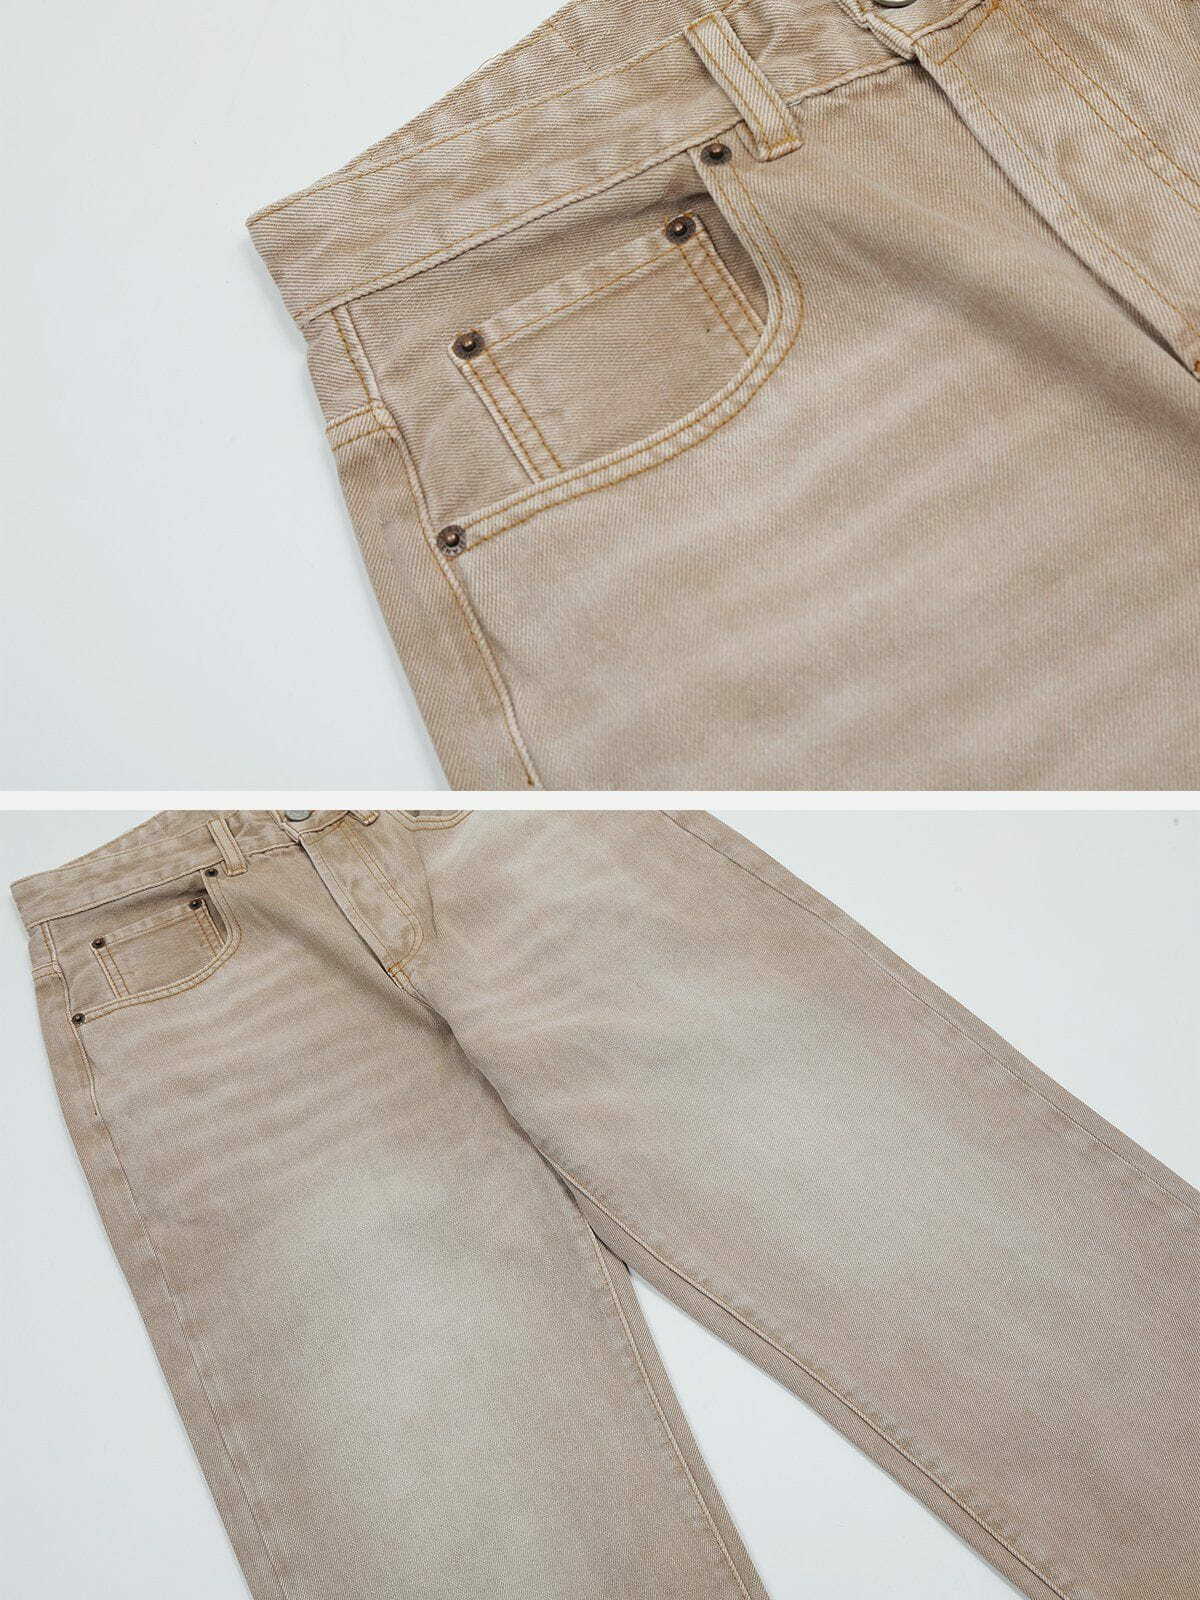 wrinkled washed jeans edgy & urban denim 1487